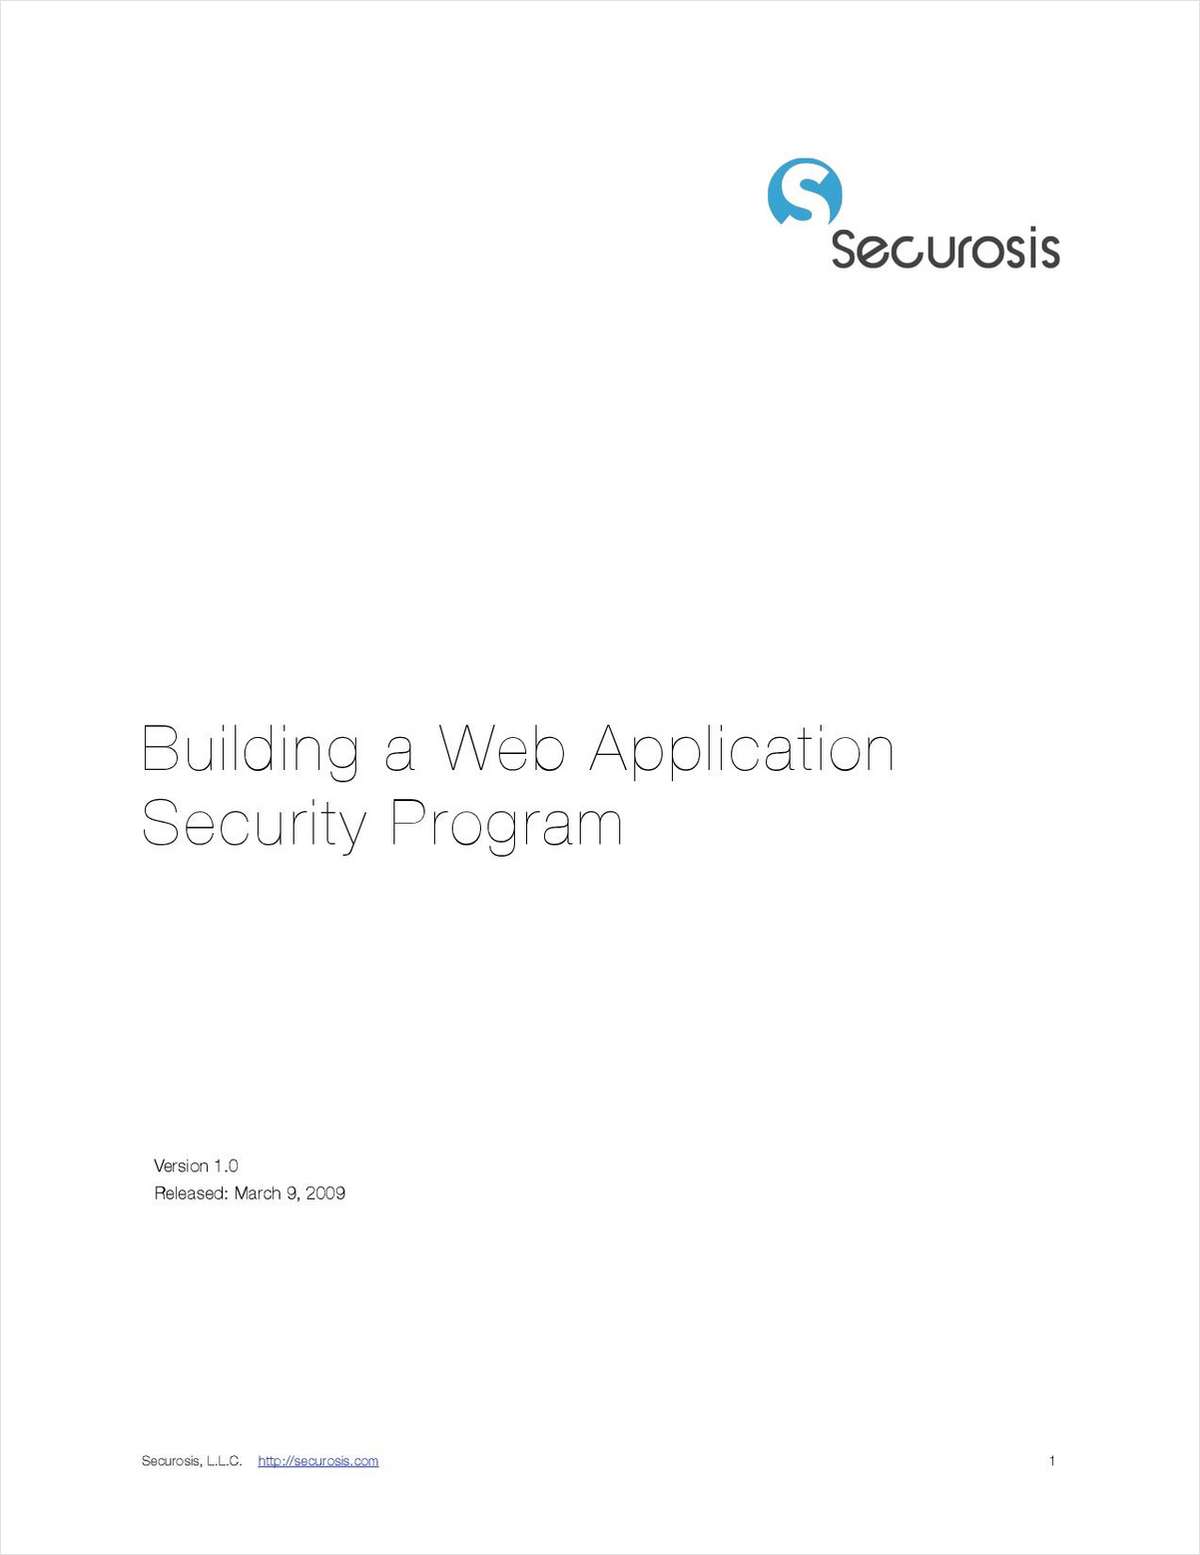 Building a Web Application Security Program